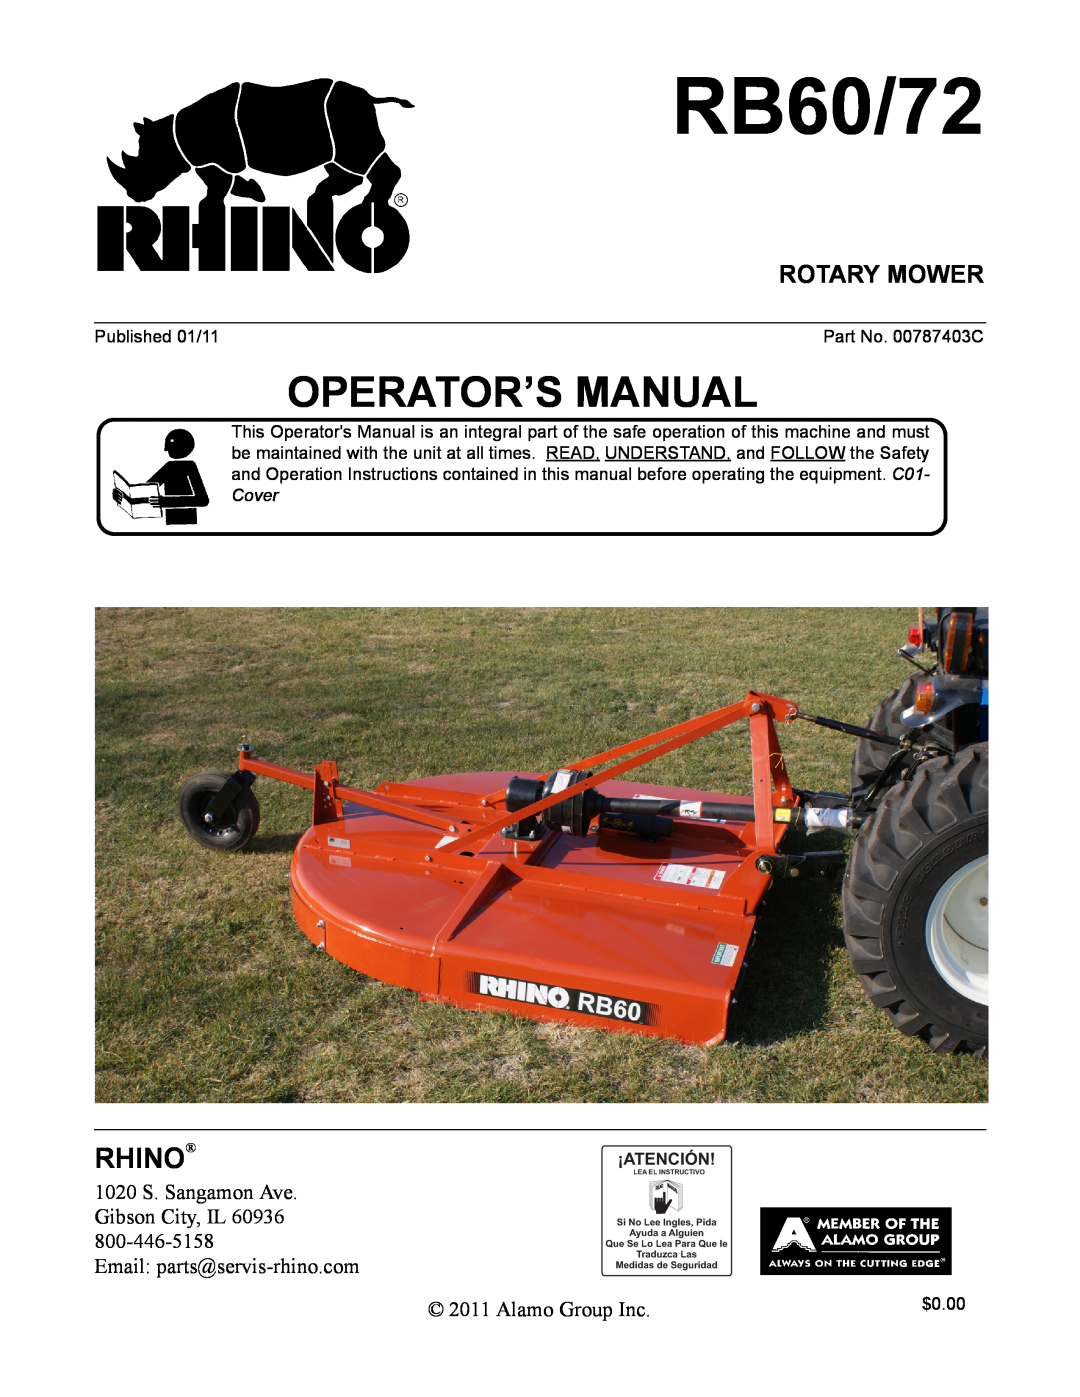 Blue Rhino RB60/72 manual Rhino, Rotary Mower, Operator’S Manual 